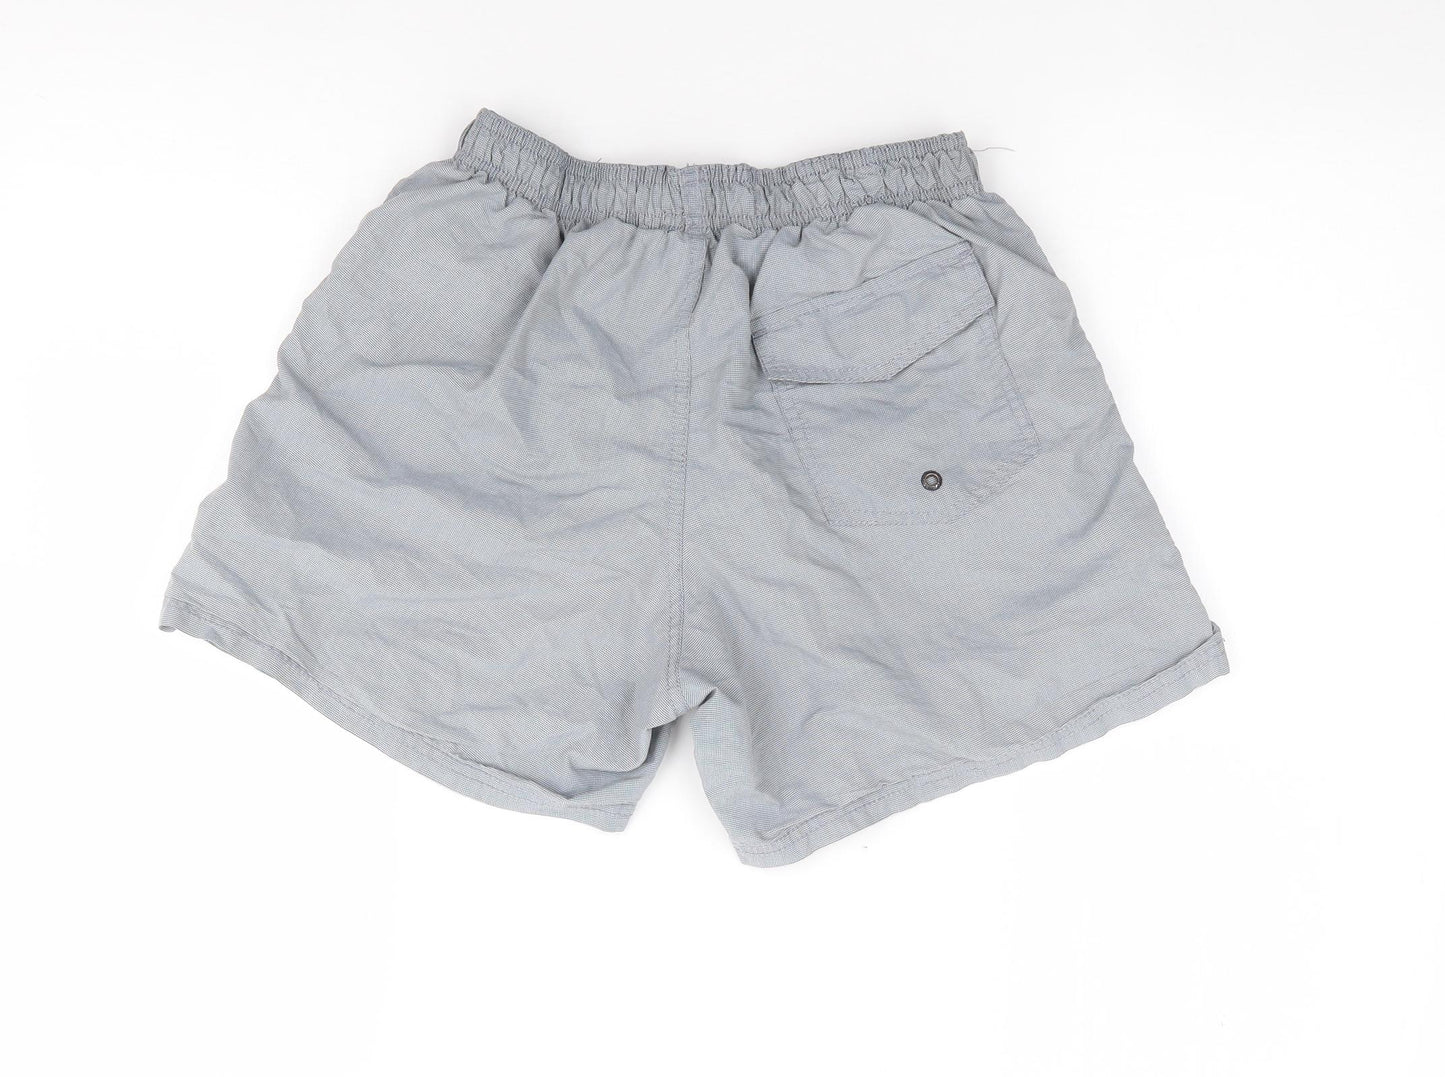 Trespass Boys Black Check Cotton Sweat Shorts Size M  Regular  - Swim Short